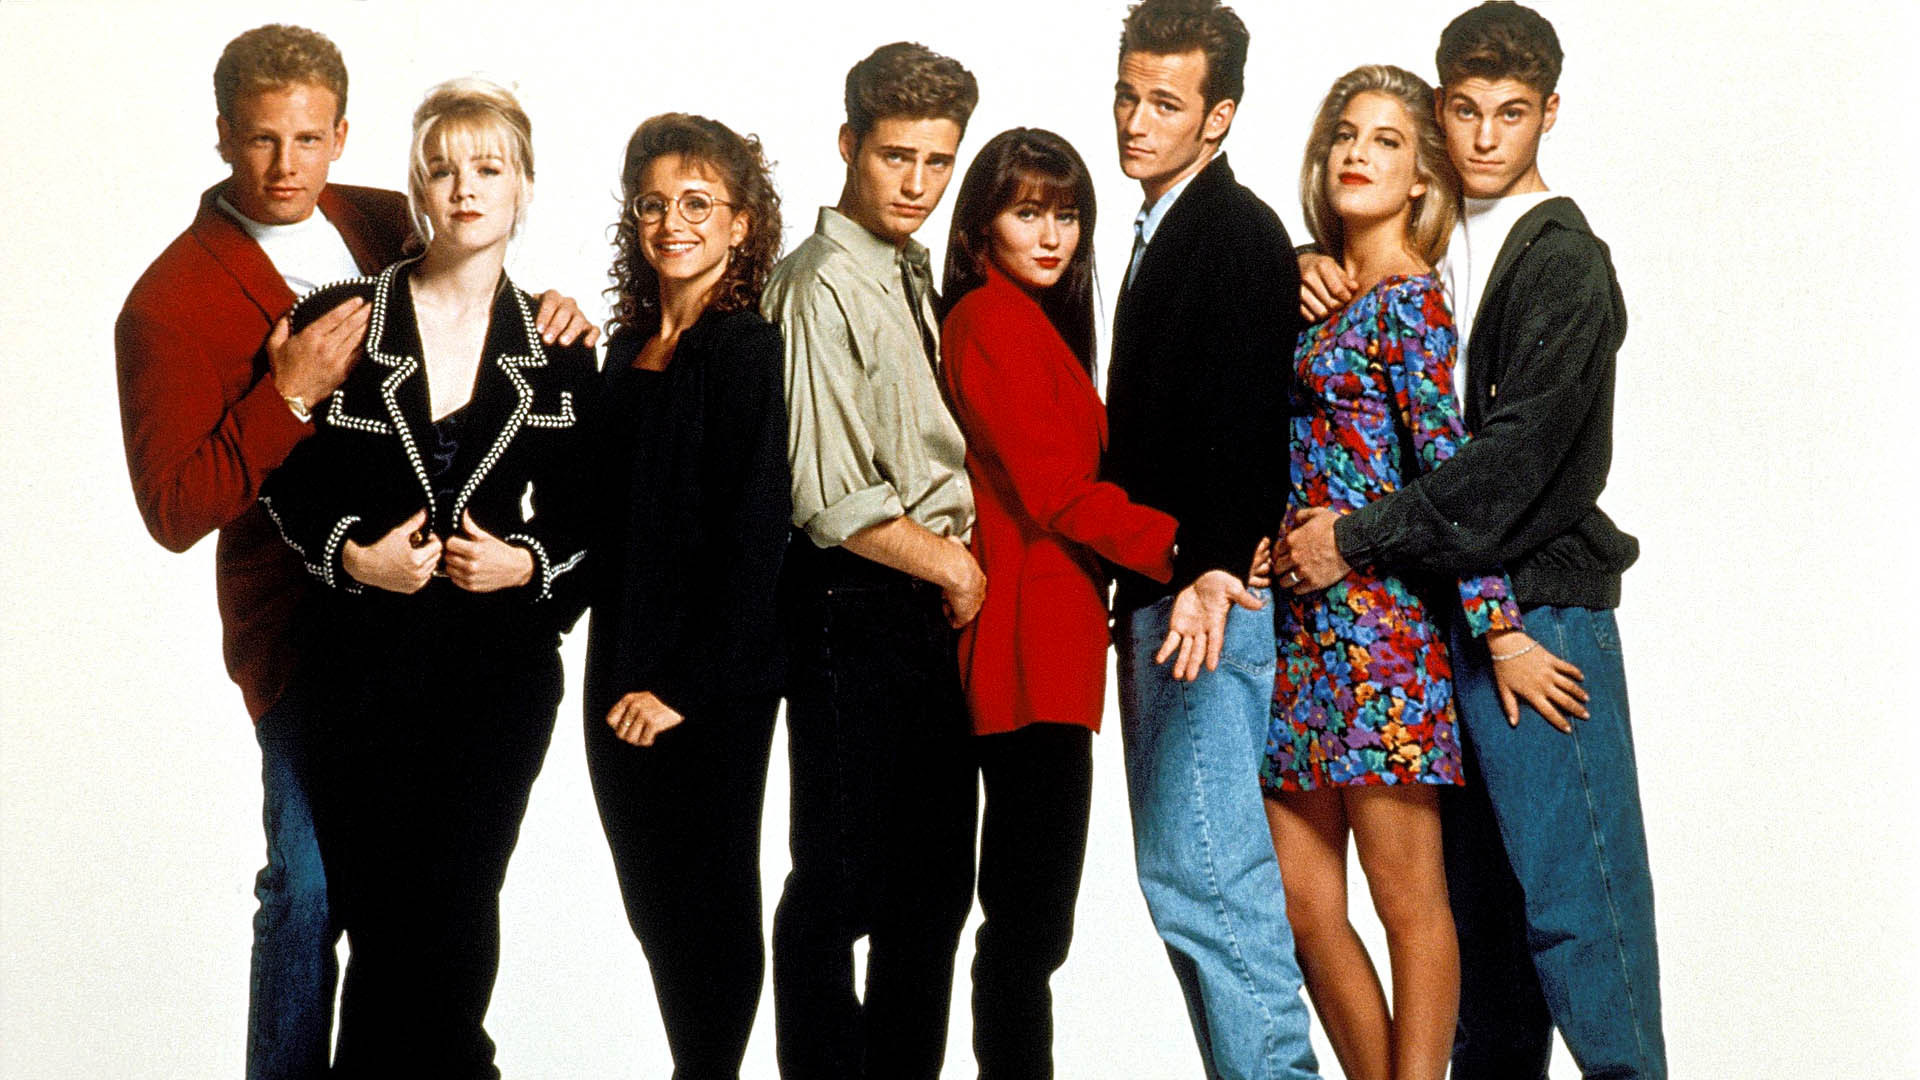 Беверли-Хиллз 90210 – 4 сезон 28 серия «Актёрские навыки» / Beverly Hills, 90210